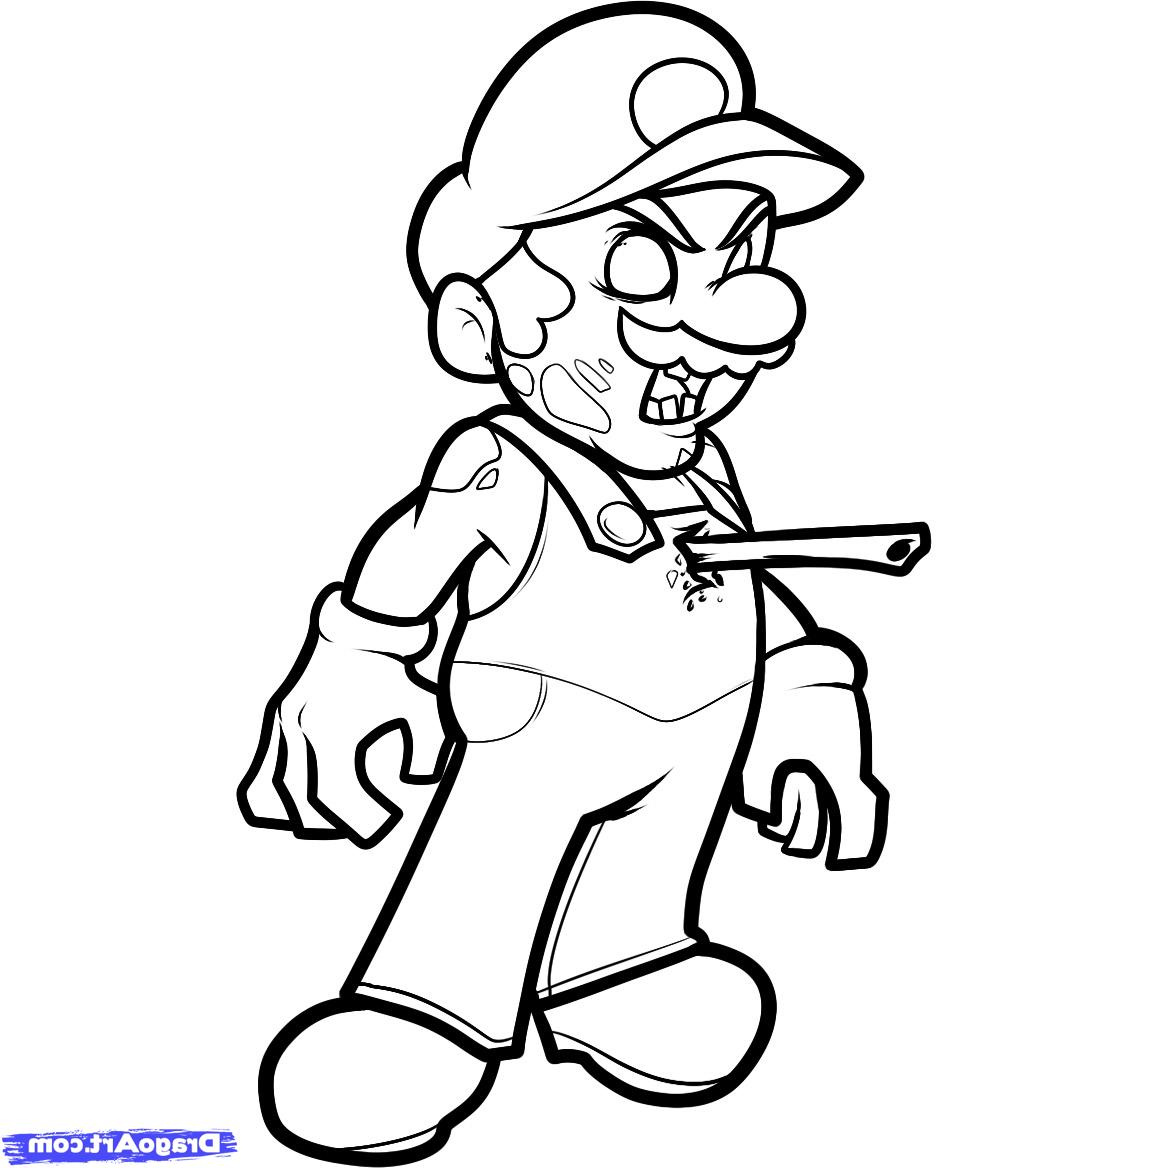 Dessin Mario Inspirant Photos How to Draw Zombie Mario Zombie Mario Step by Step